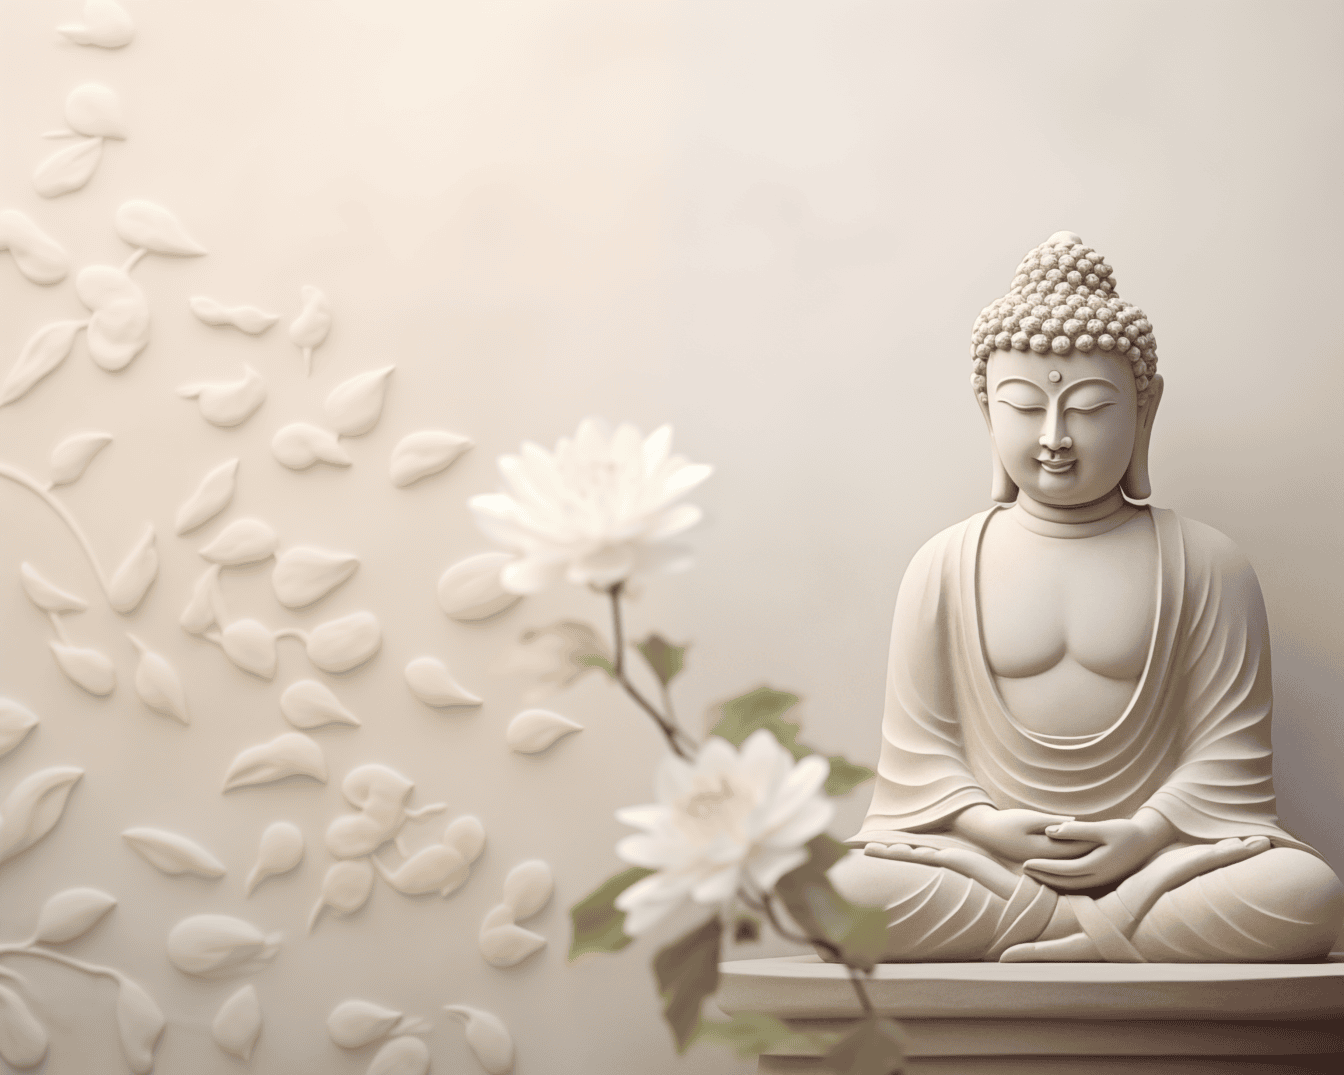 Patung Buddha dalam meditasi spiritual transendental sambil duduk dalam posisi lotus